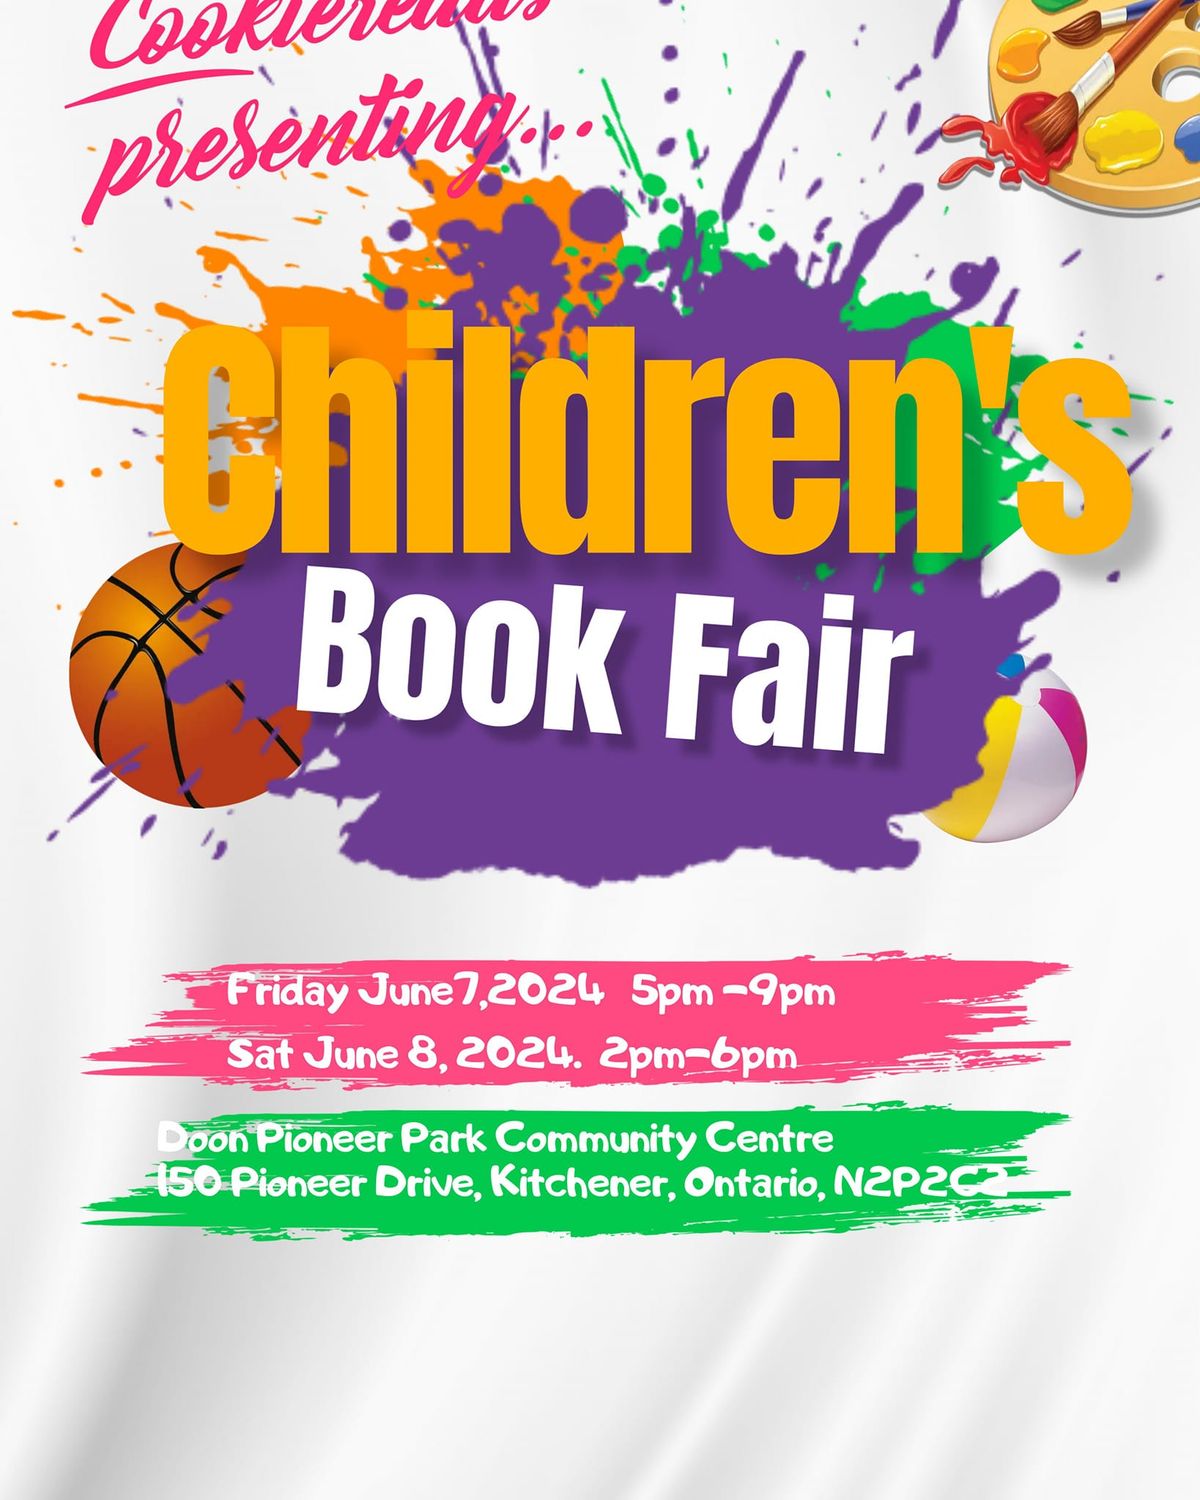 Cookiereads Children's Book fair